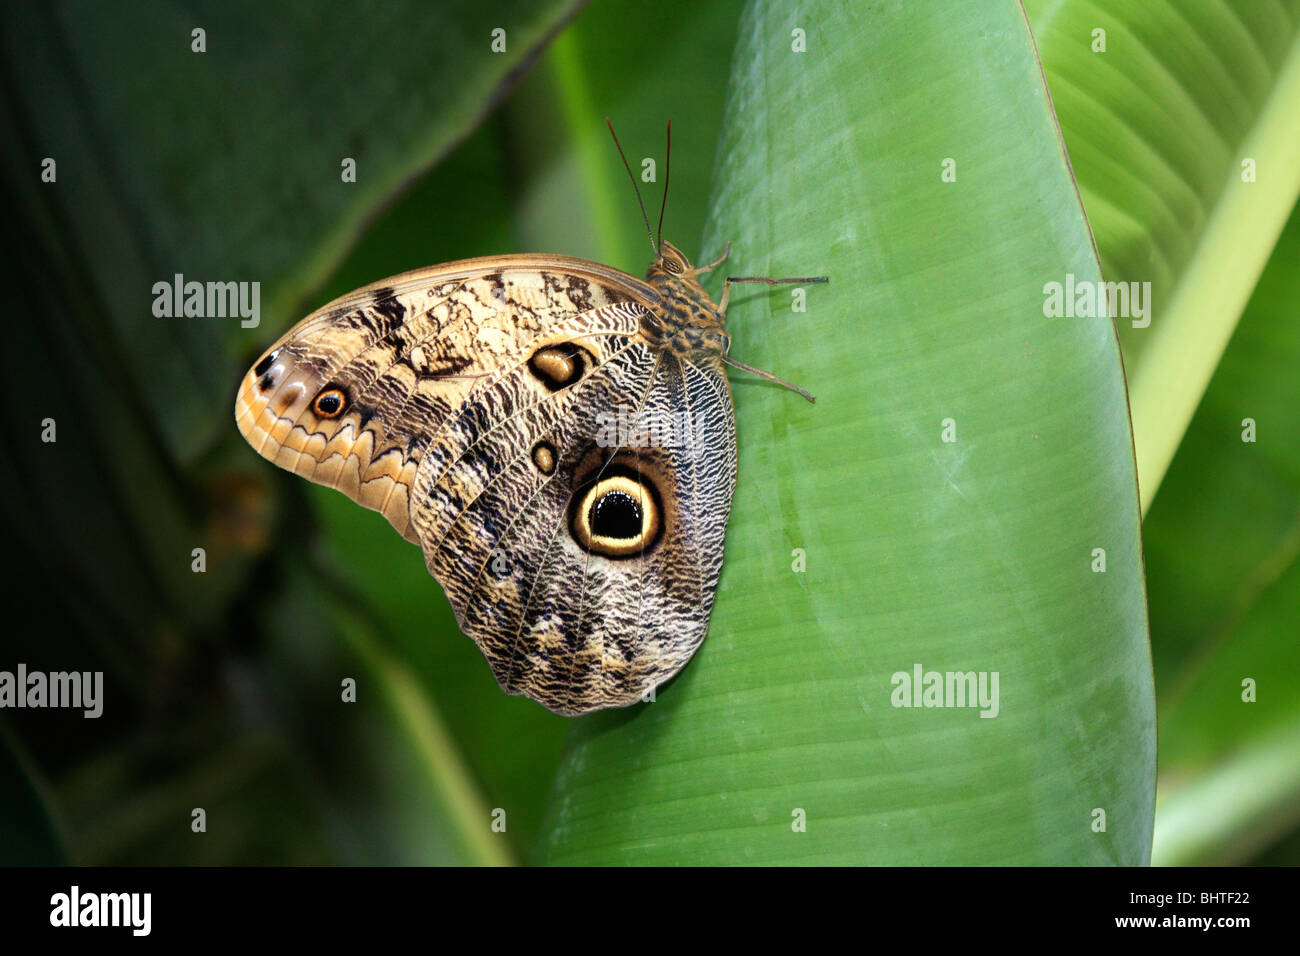 Owl Butterfly Caligo memnon on banana plant leaf Stock Photo